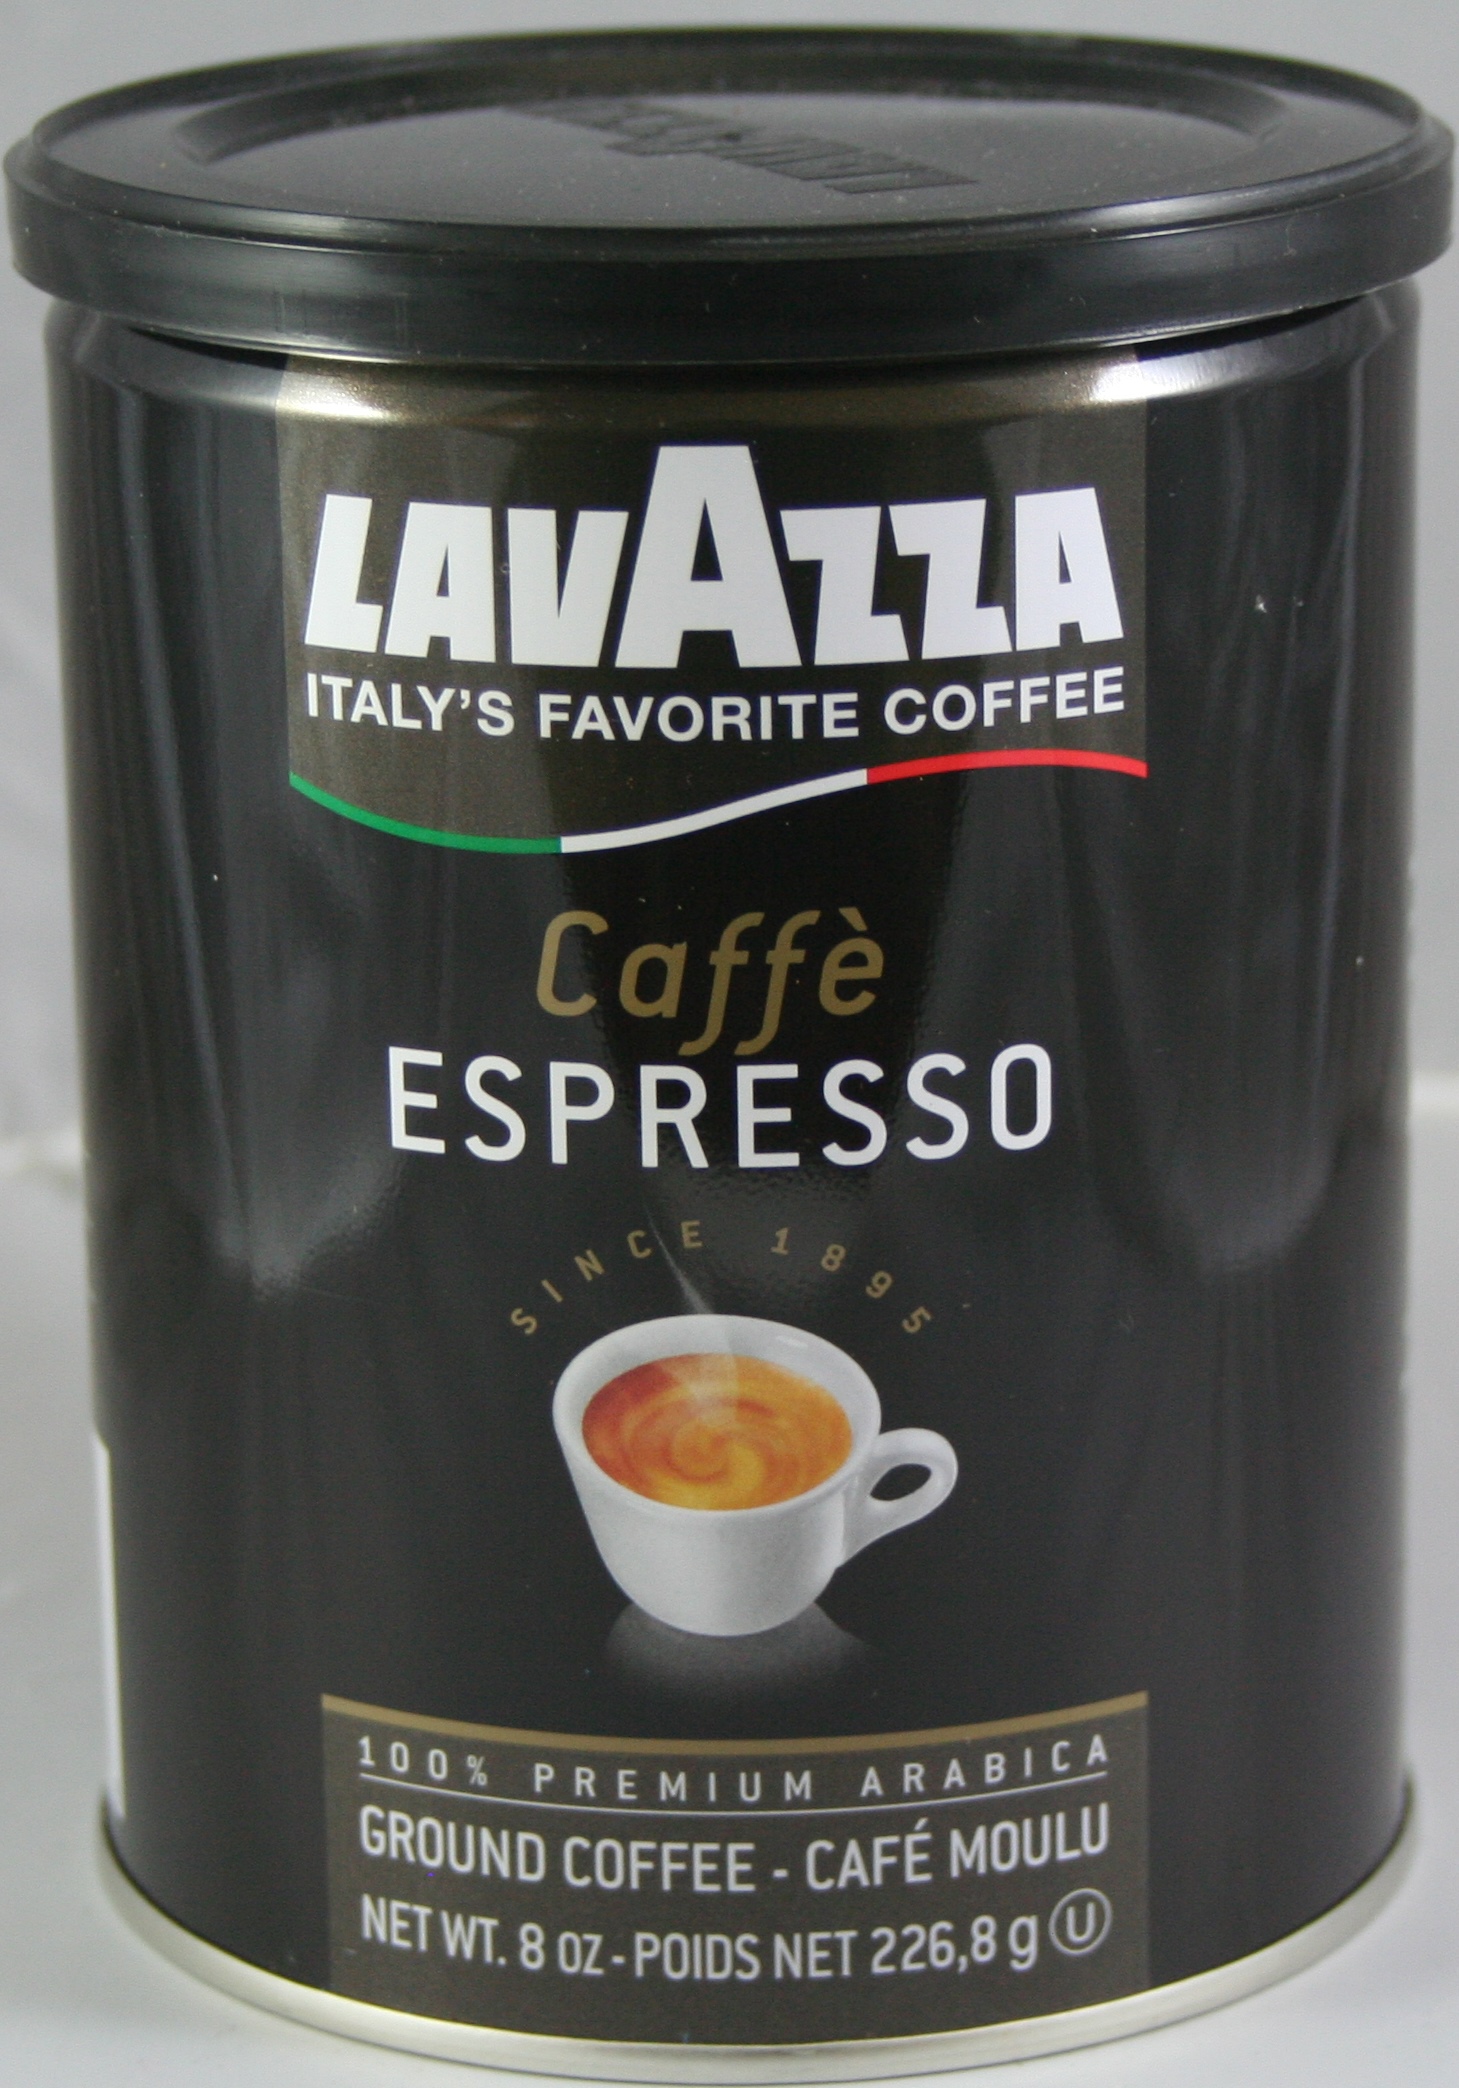 https://dorismarket.com/wp-content/uploads/2018/09/LAVAZZA-CAFFE-ESPRESSO-CAN.jpg